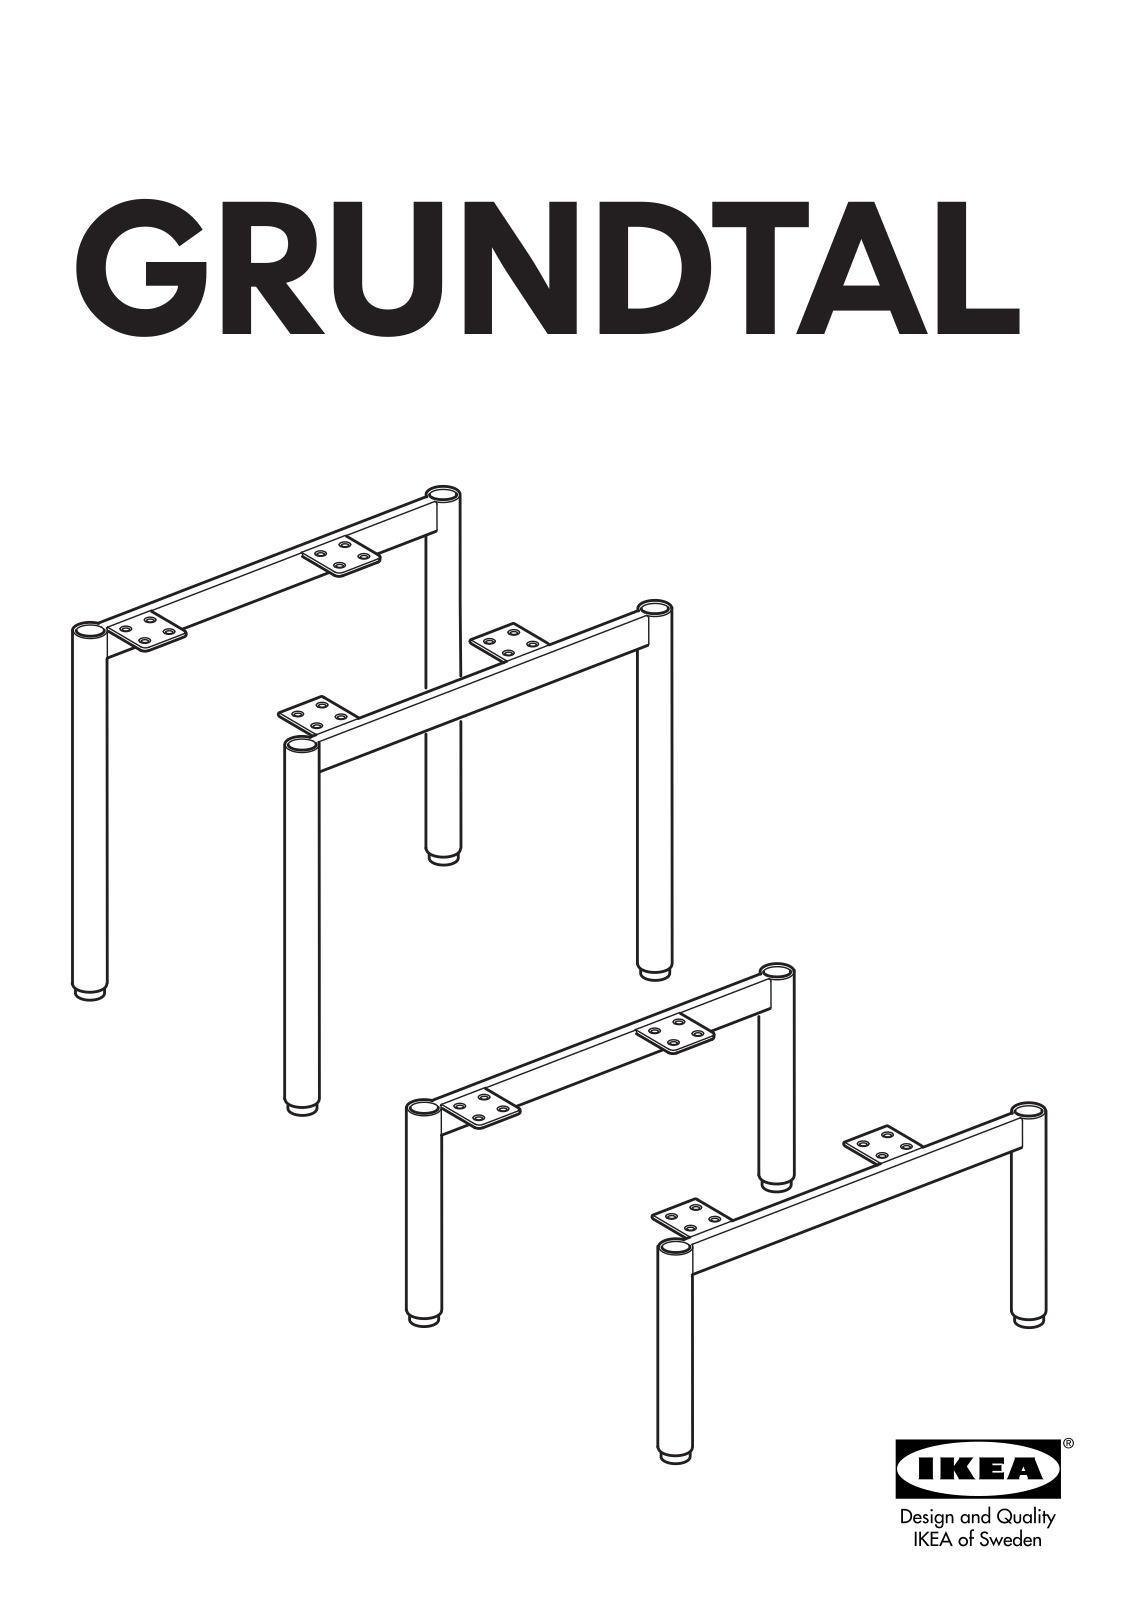 IKEA GRUNDTAL LEGS Assembly Instruction